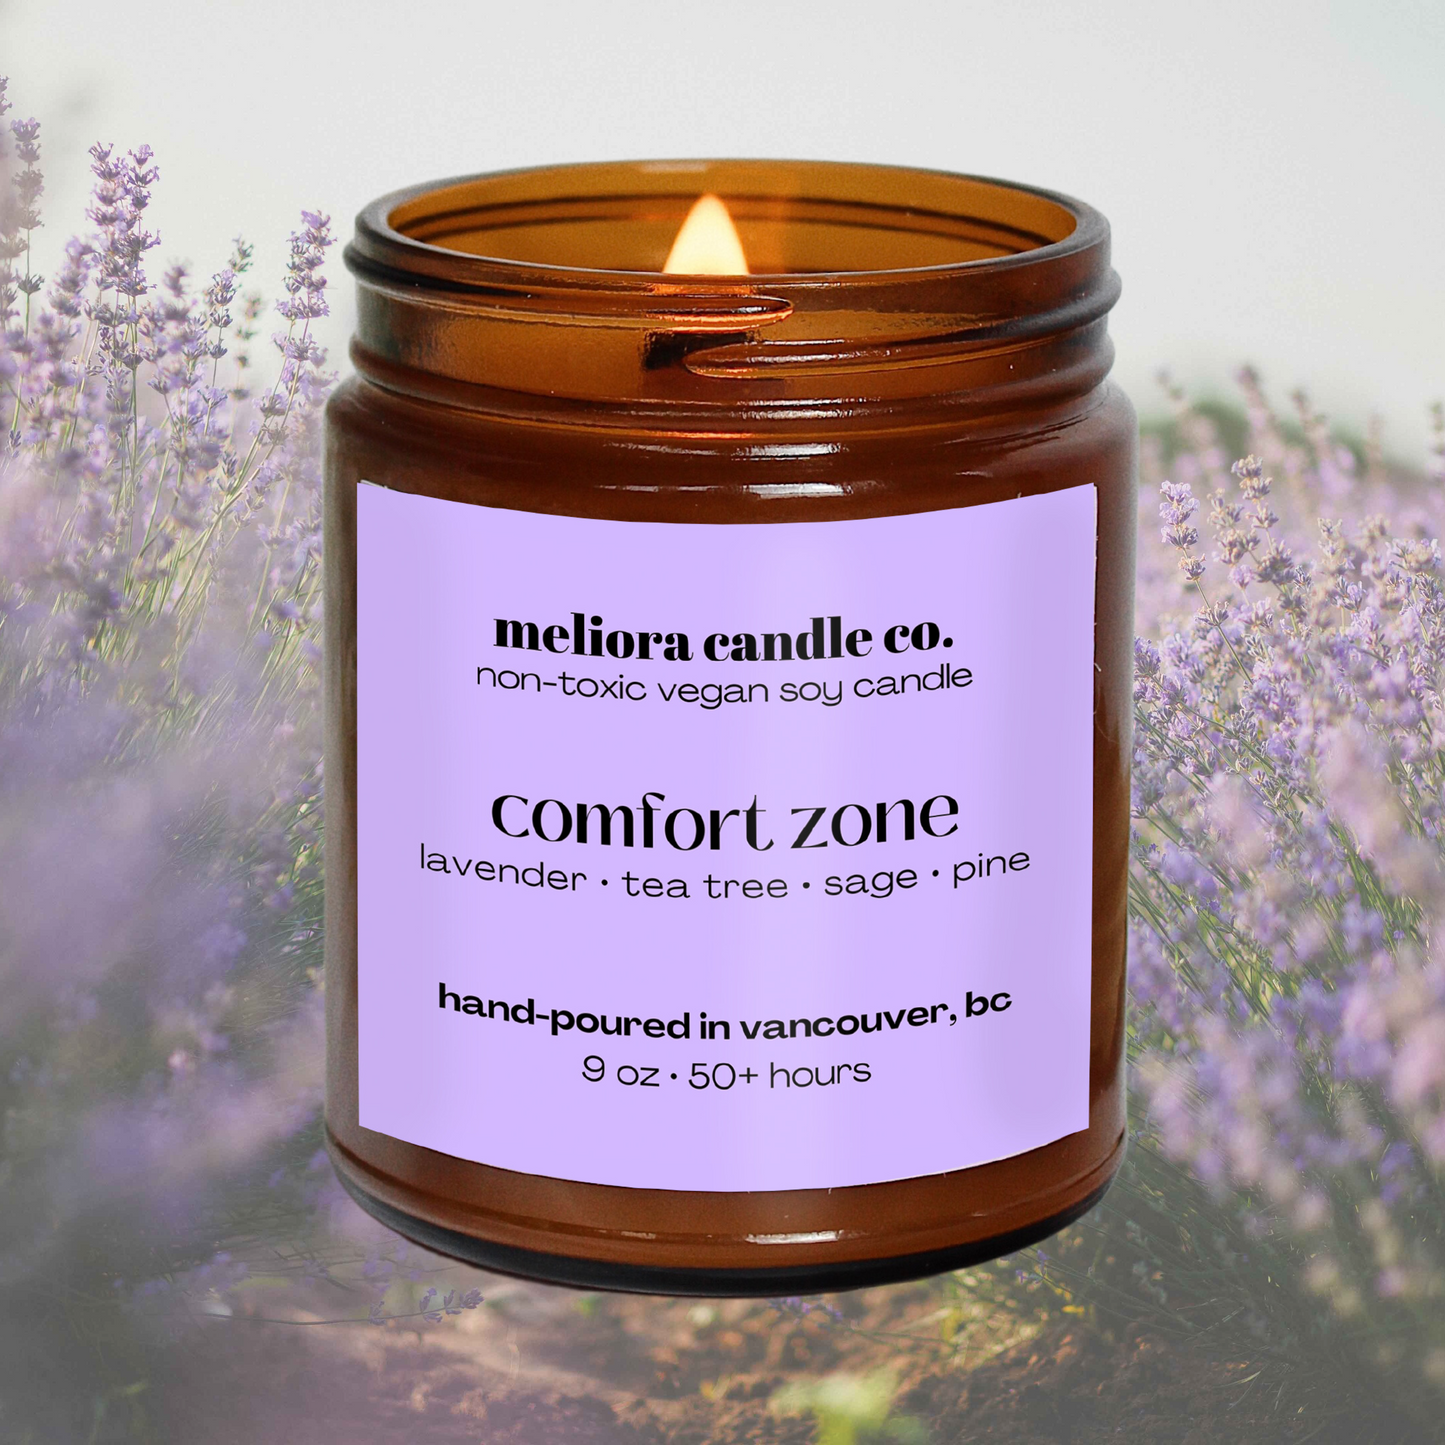 comfort zone - lavender, tea tree, pine, & sage